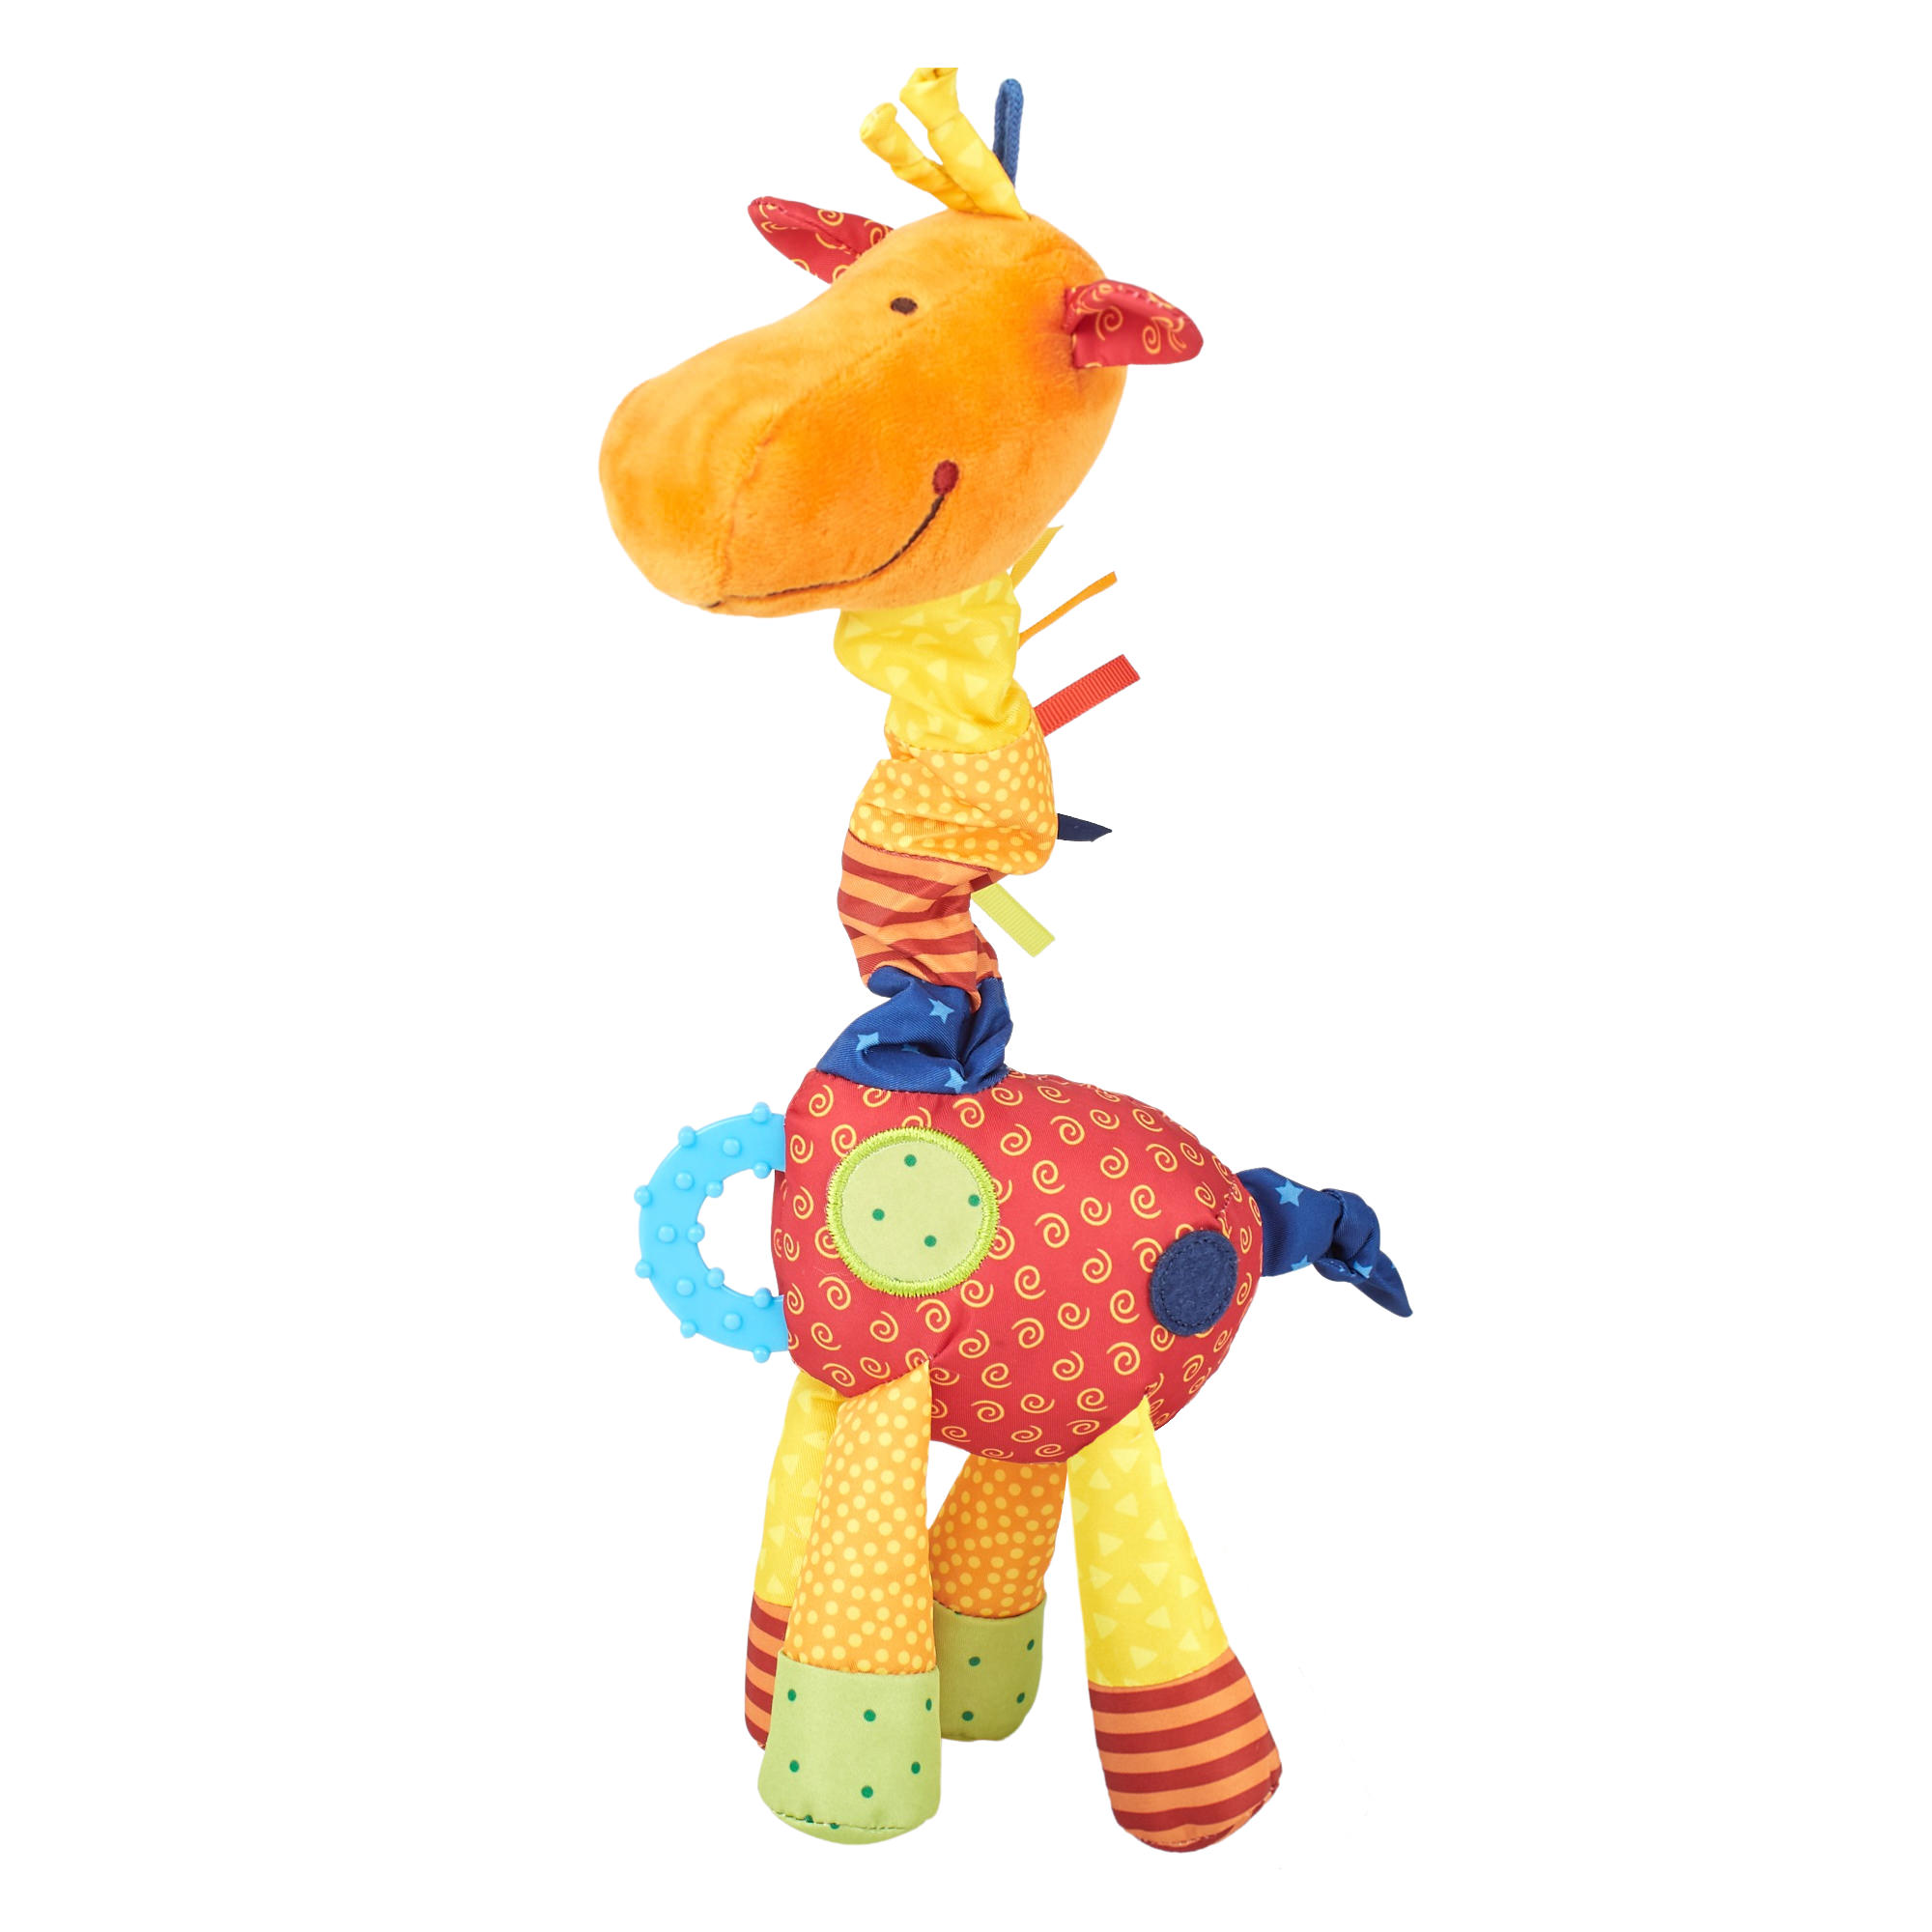 Babyspielzeug Entdecker-Giraffe